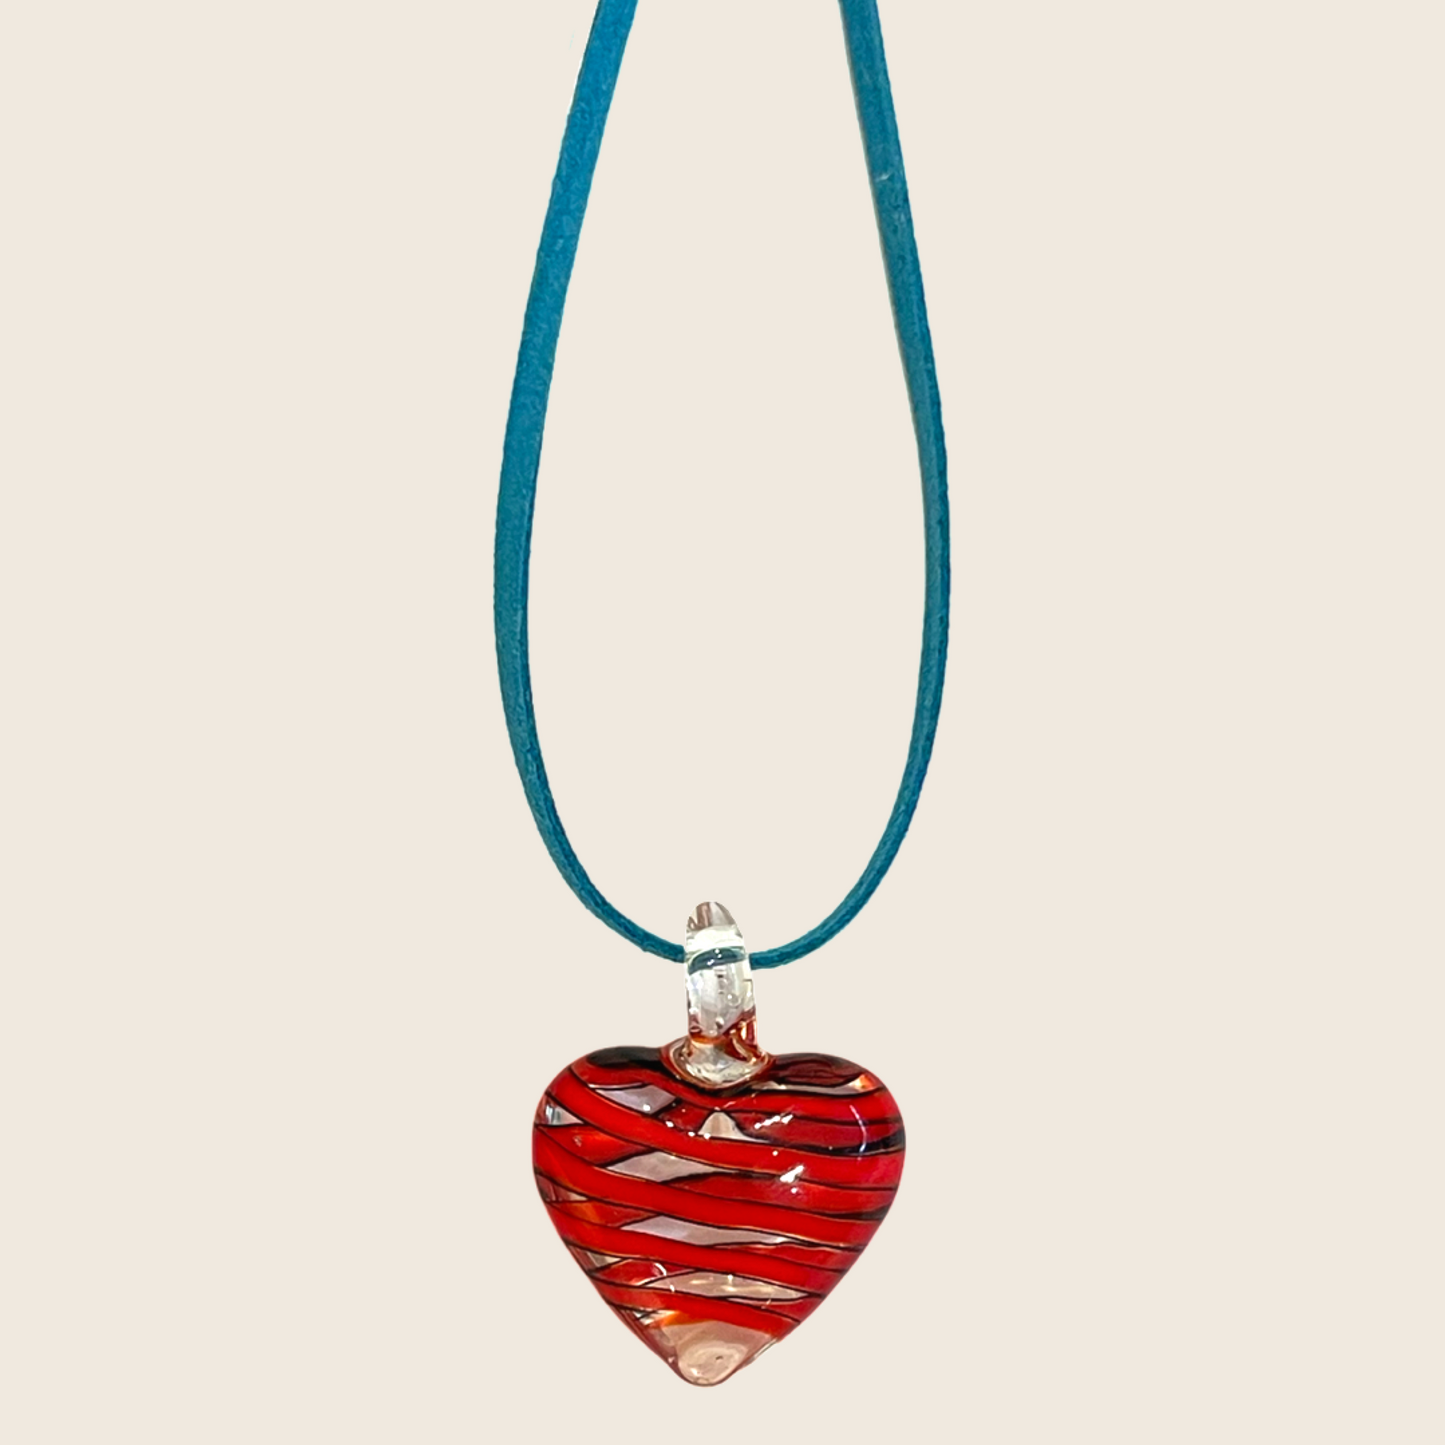 Striped Heart Glass Necklace - Lemon Lua Striped Heart Glass Necklace Lemon Lua Red with Black / Black Lemon Lua Striped Heart Glass Necklace Striped Heart Glass Necklace